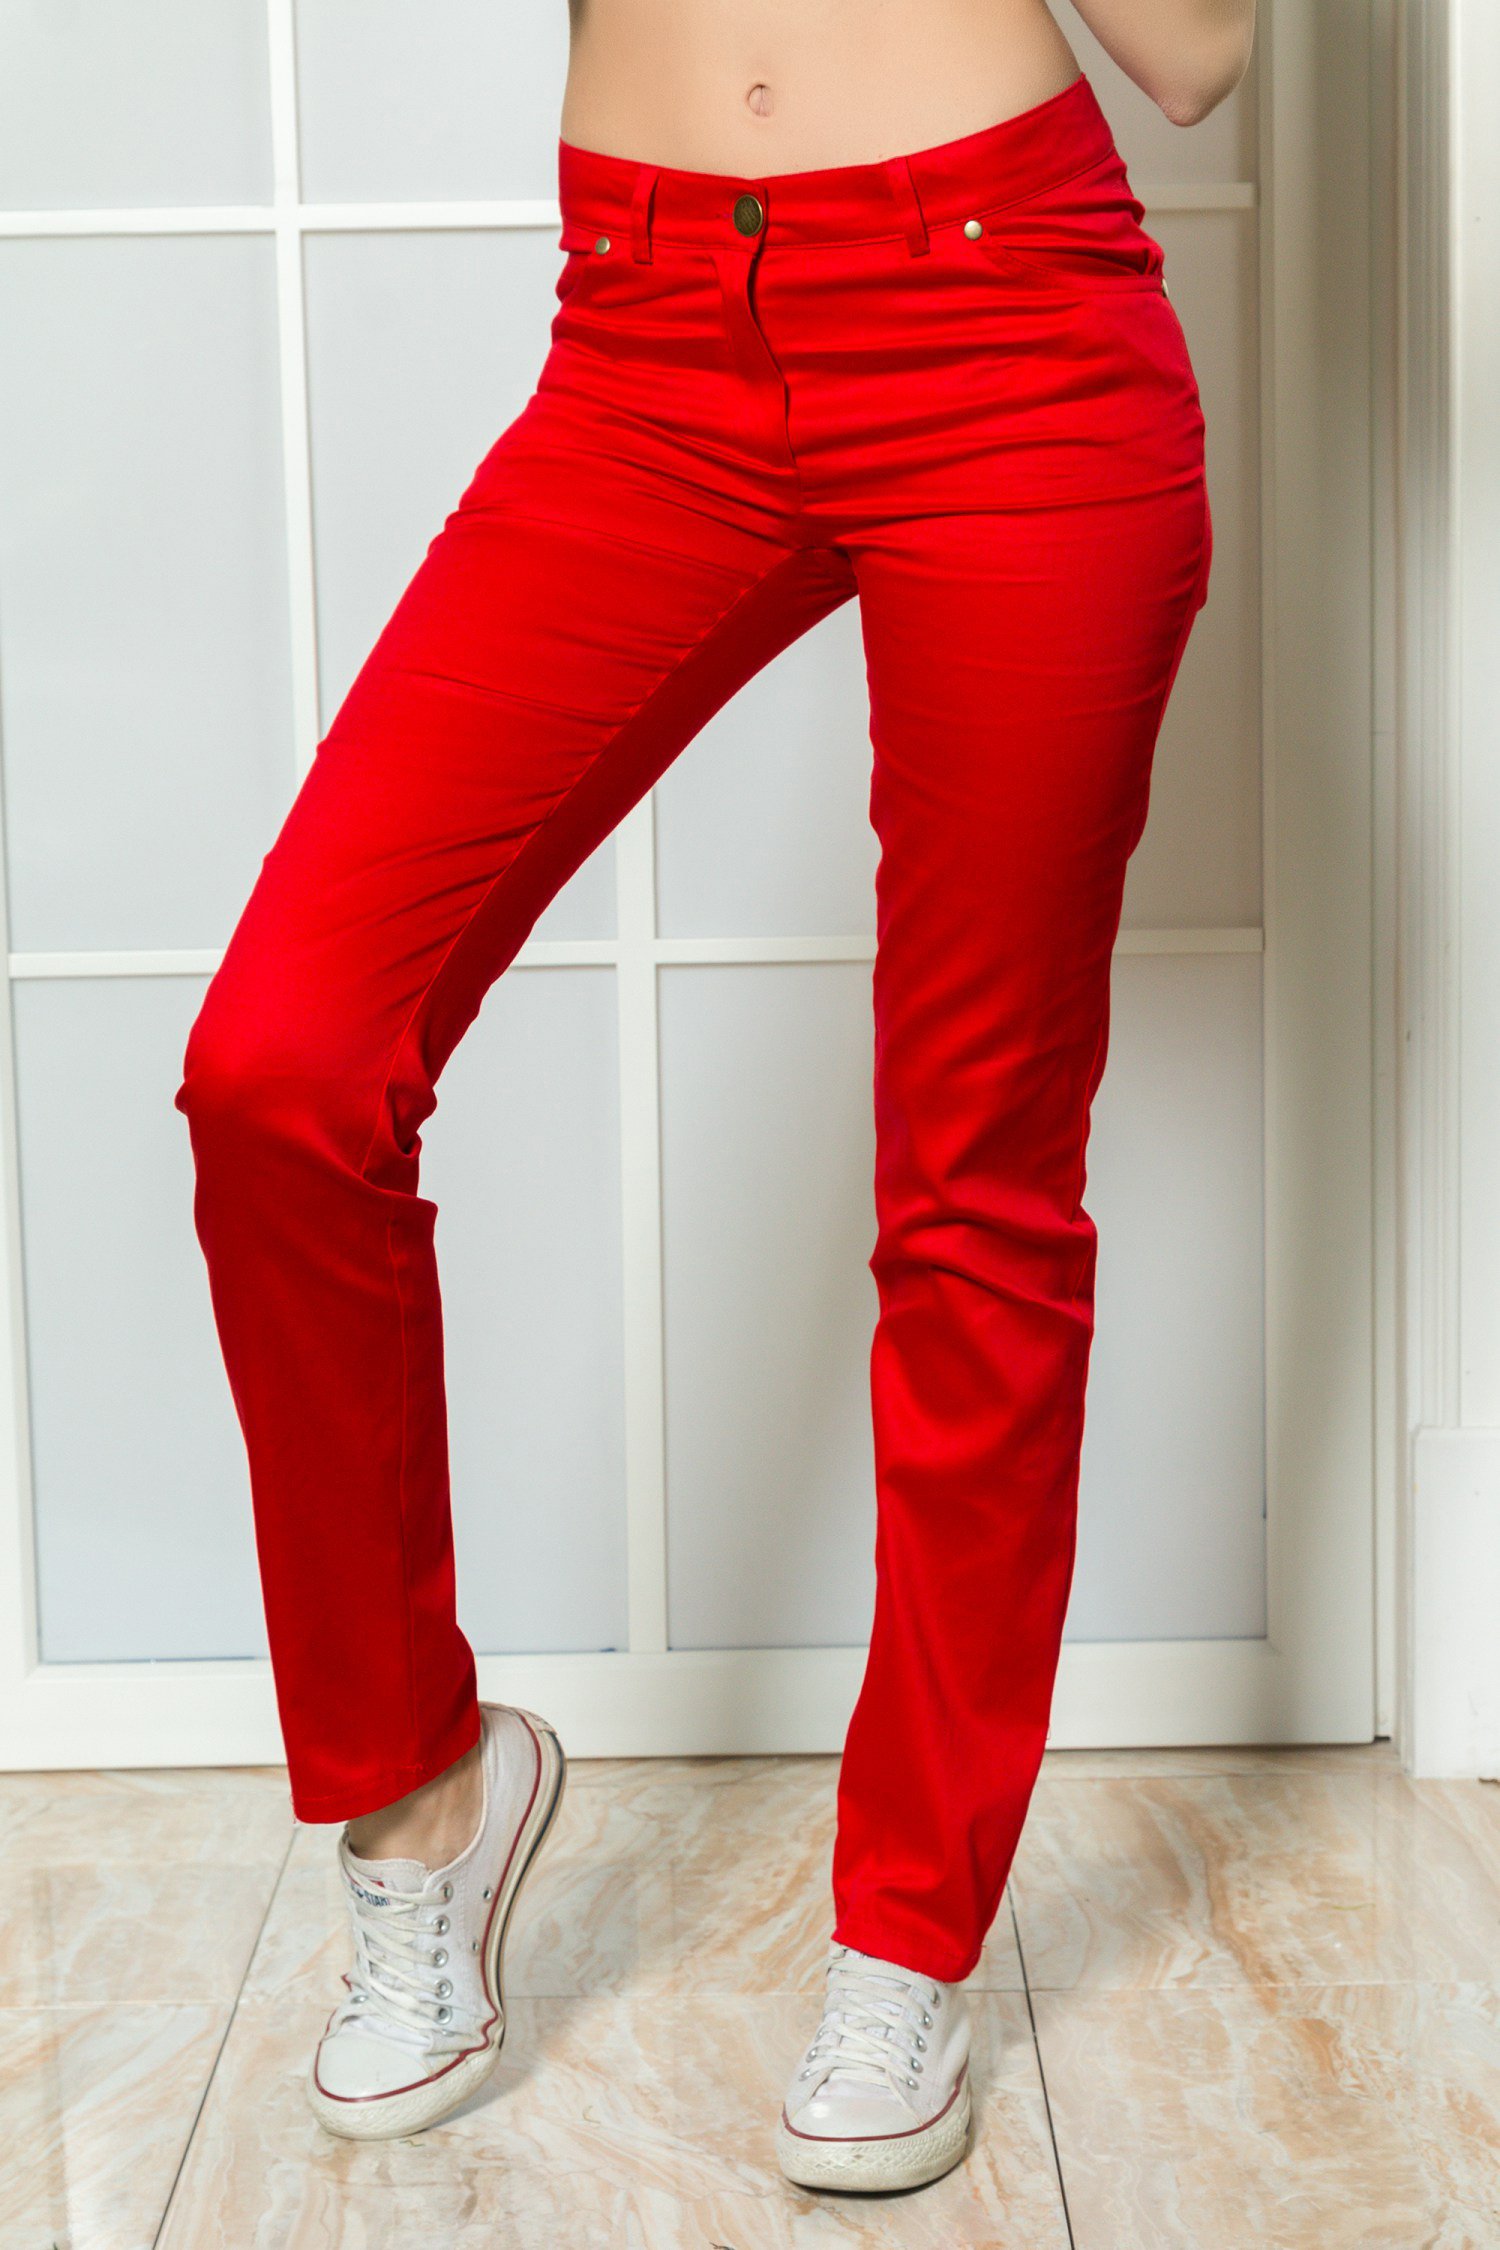 Red skinny pants